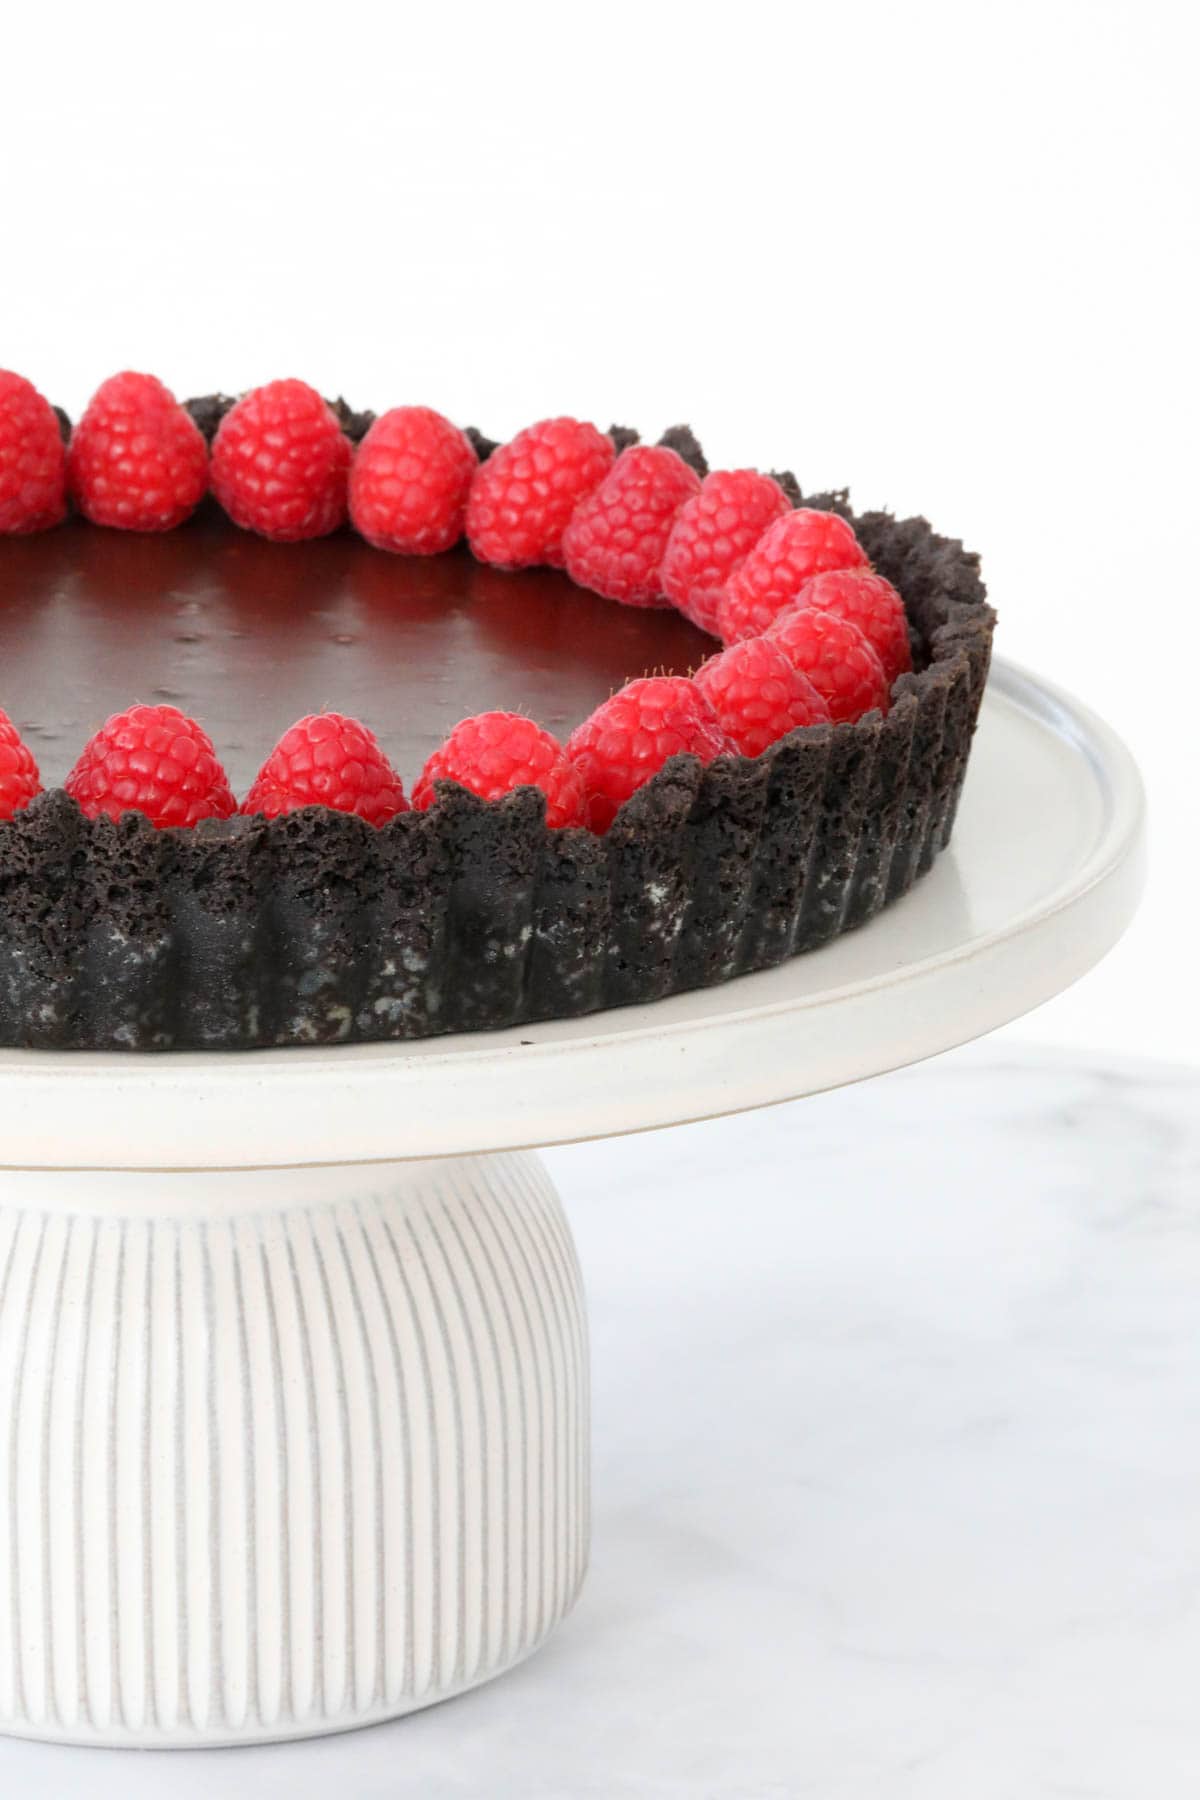 Fresh raspberries decorating the edge of a chocolate tart.